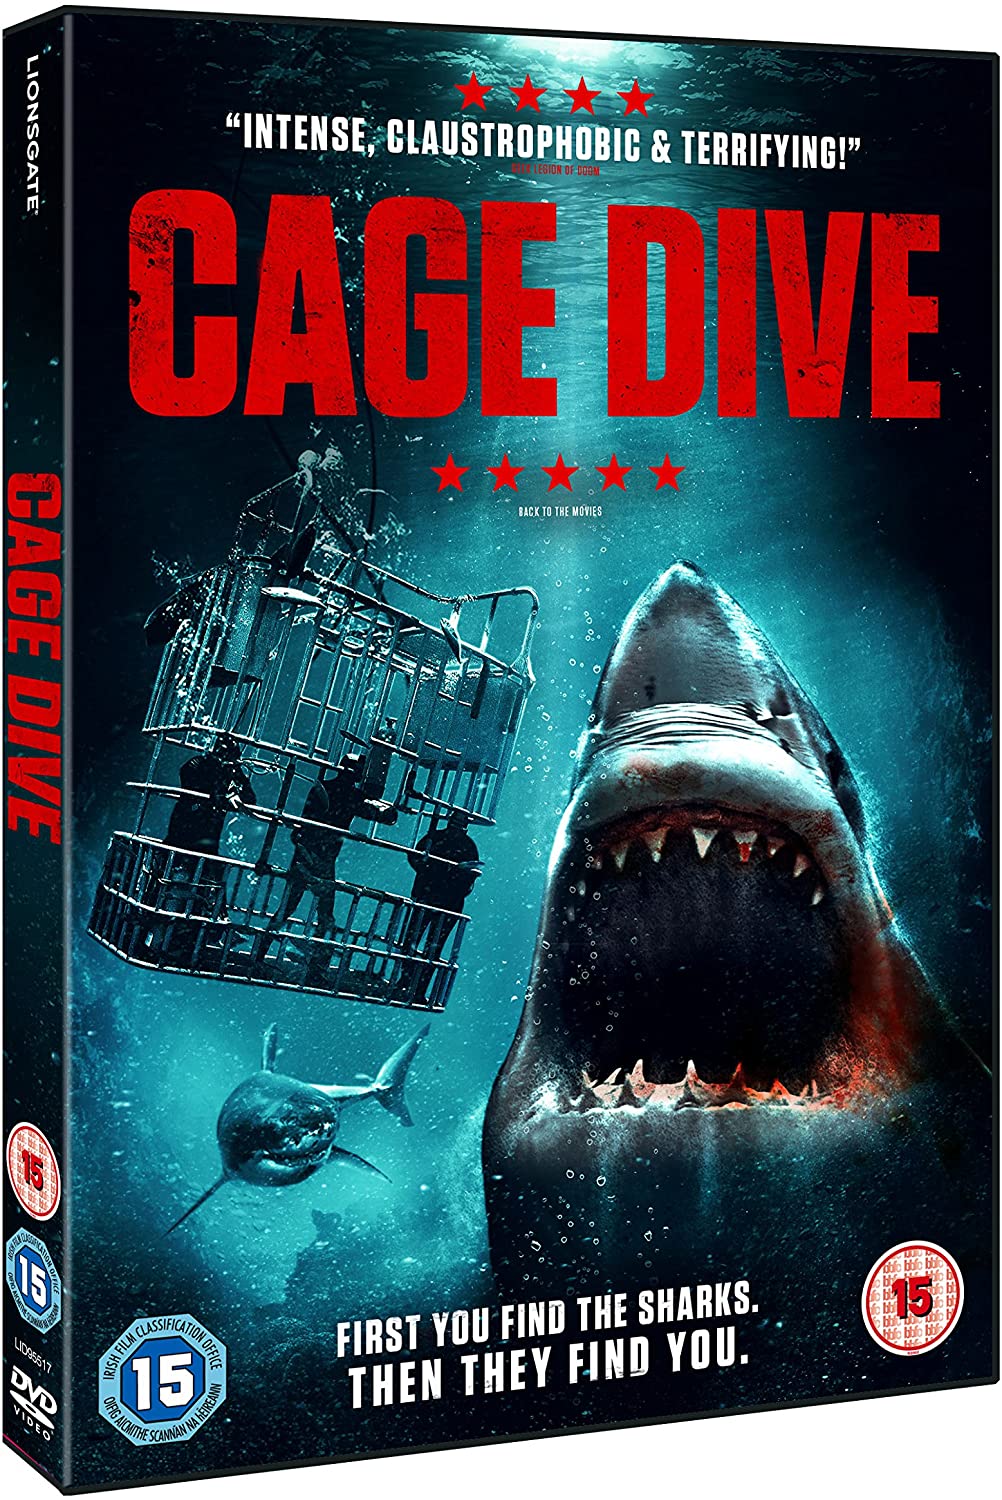 Cage Dive - Horror/Drama [DVD]